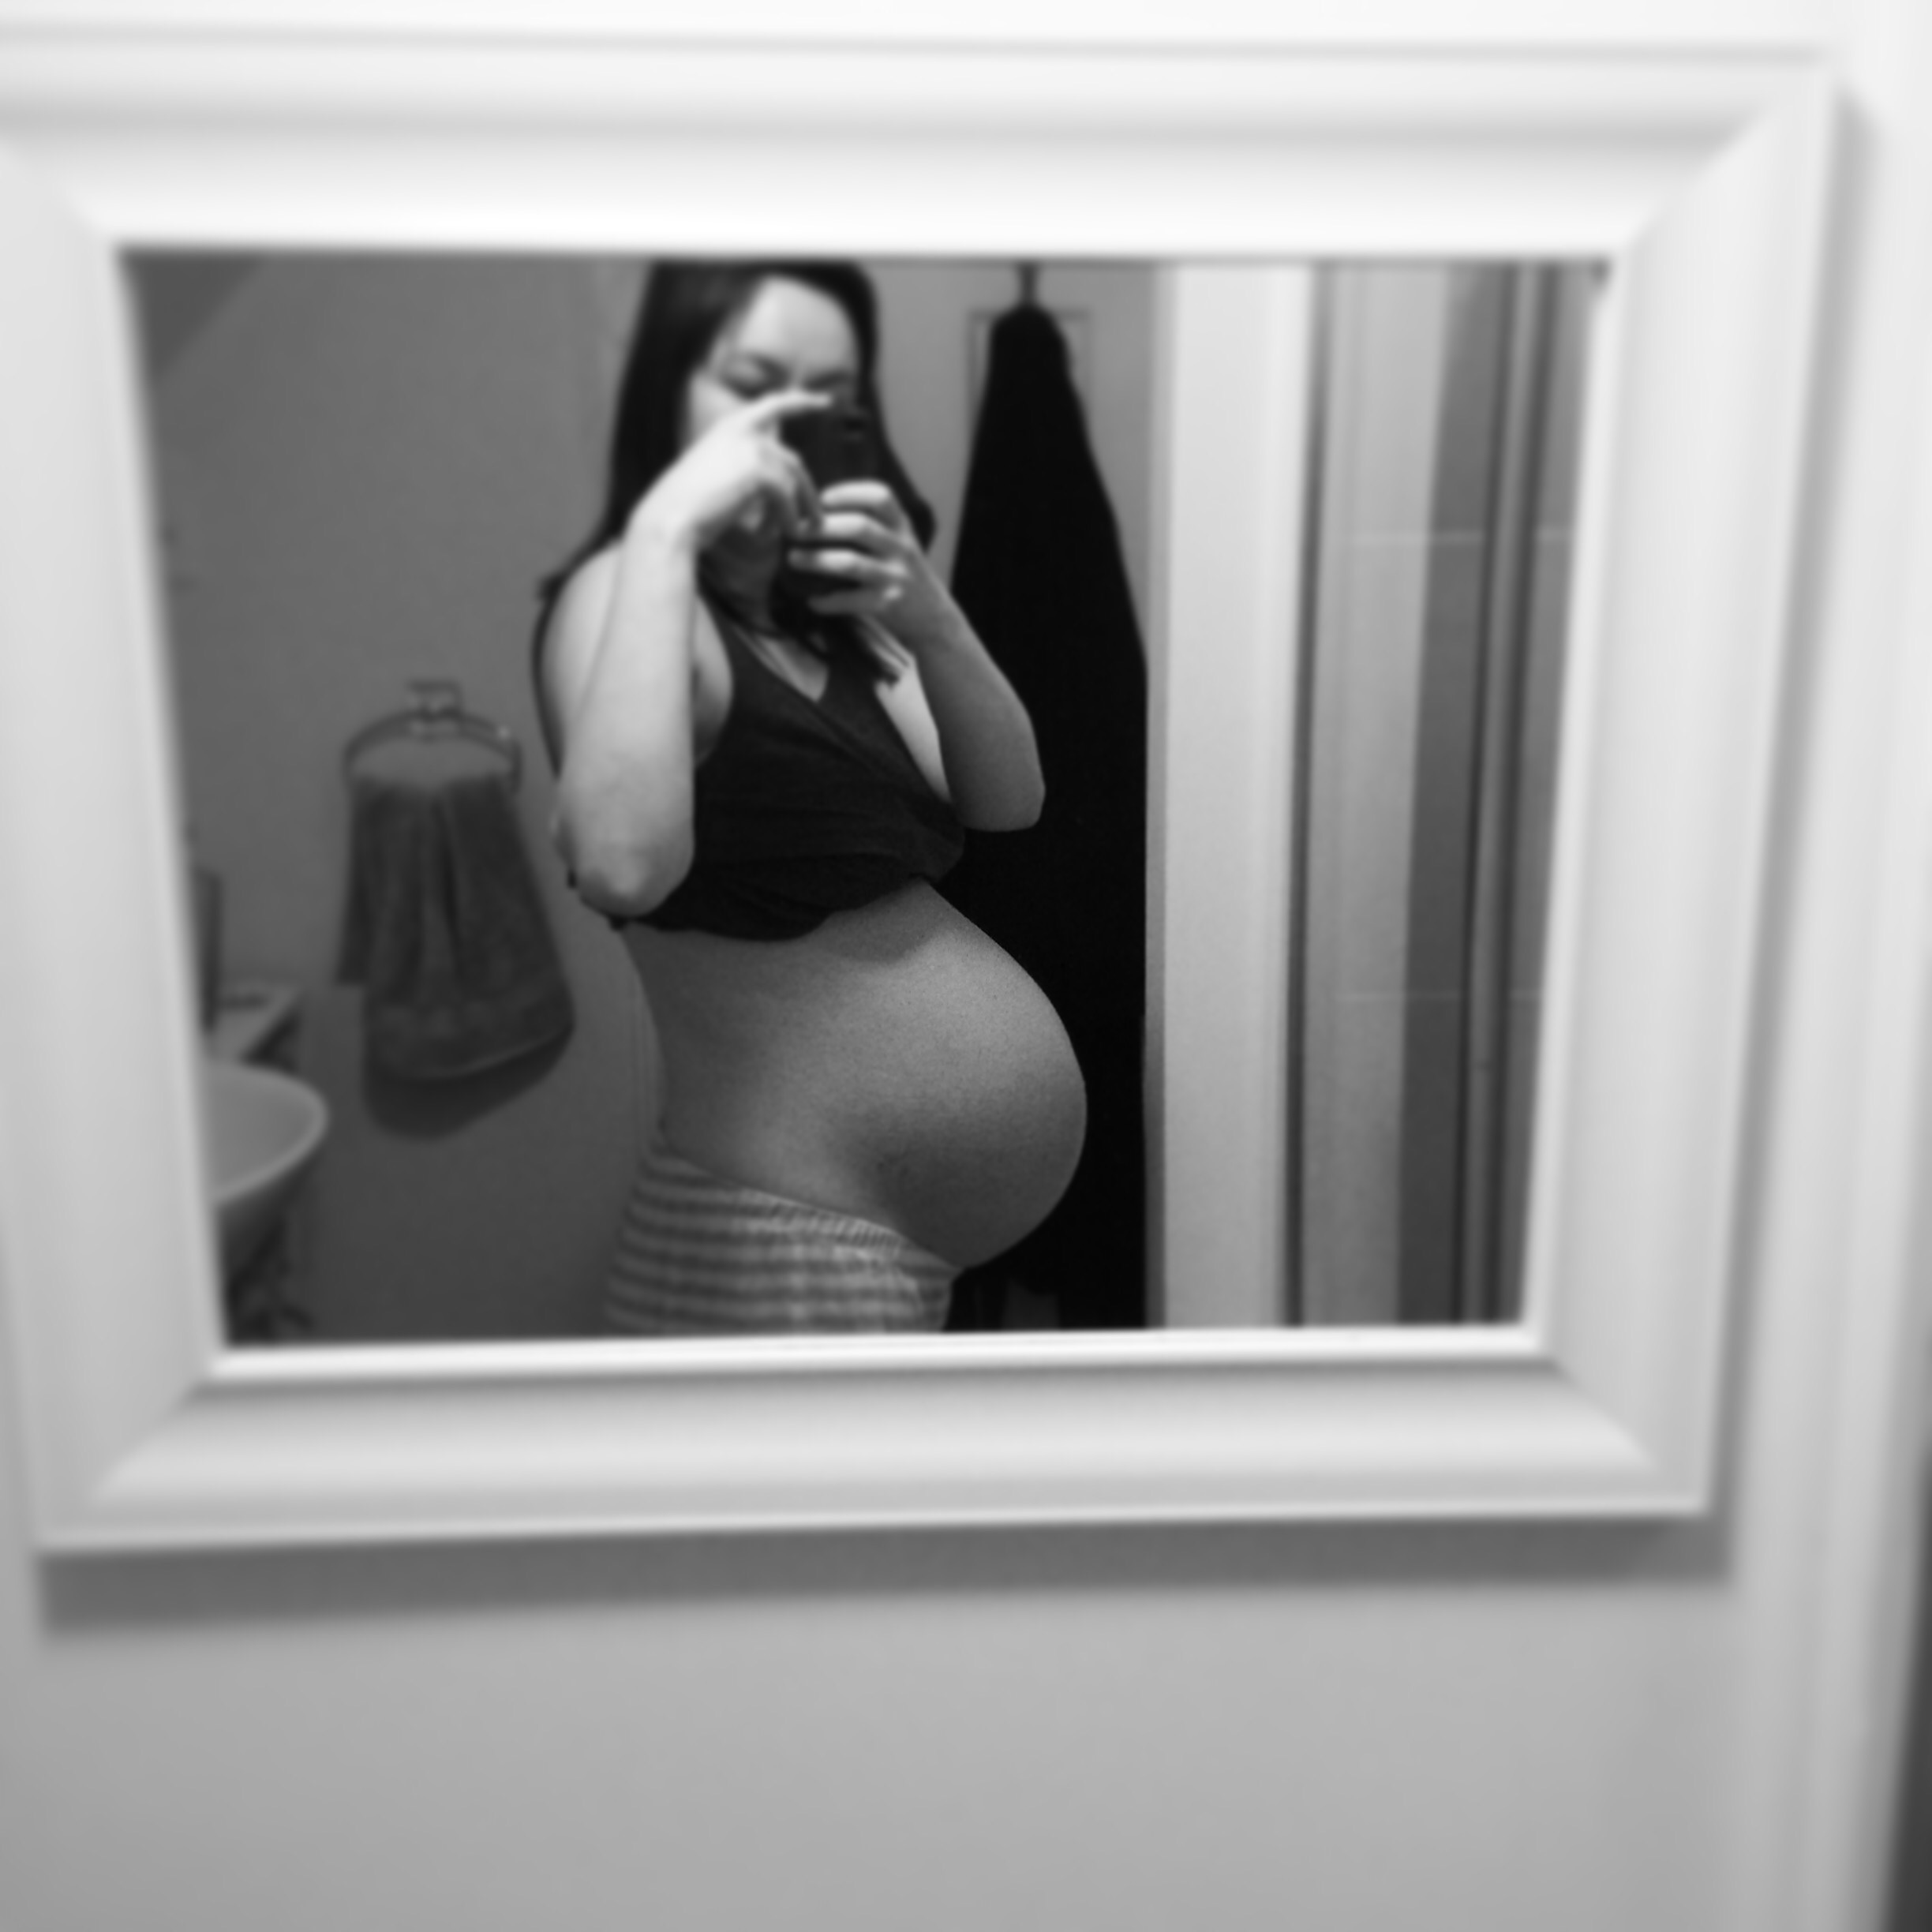 9 months pregnant